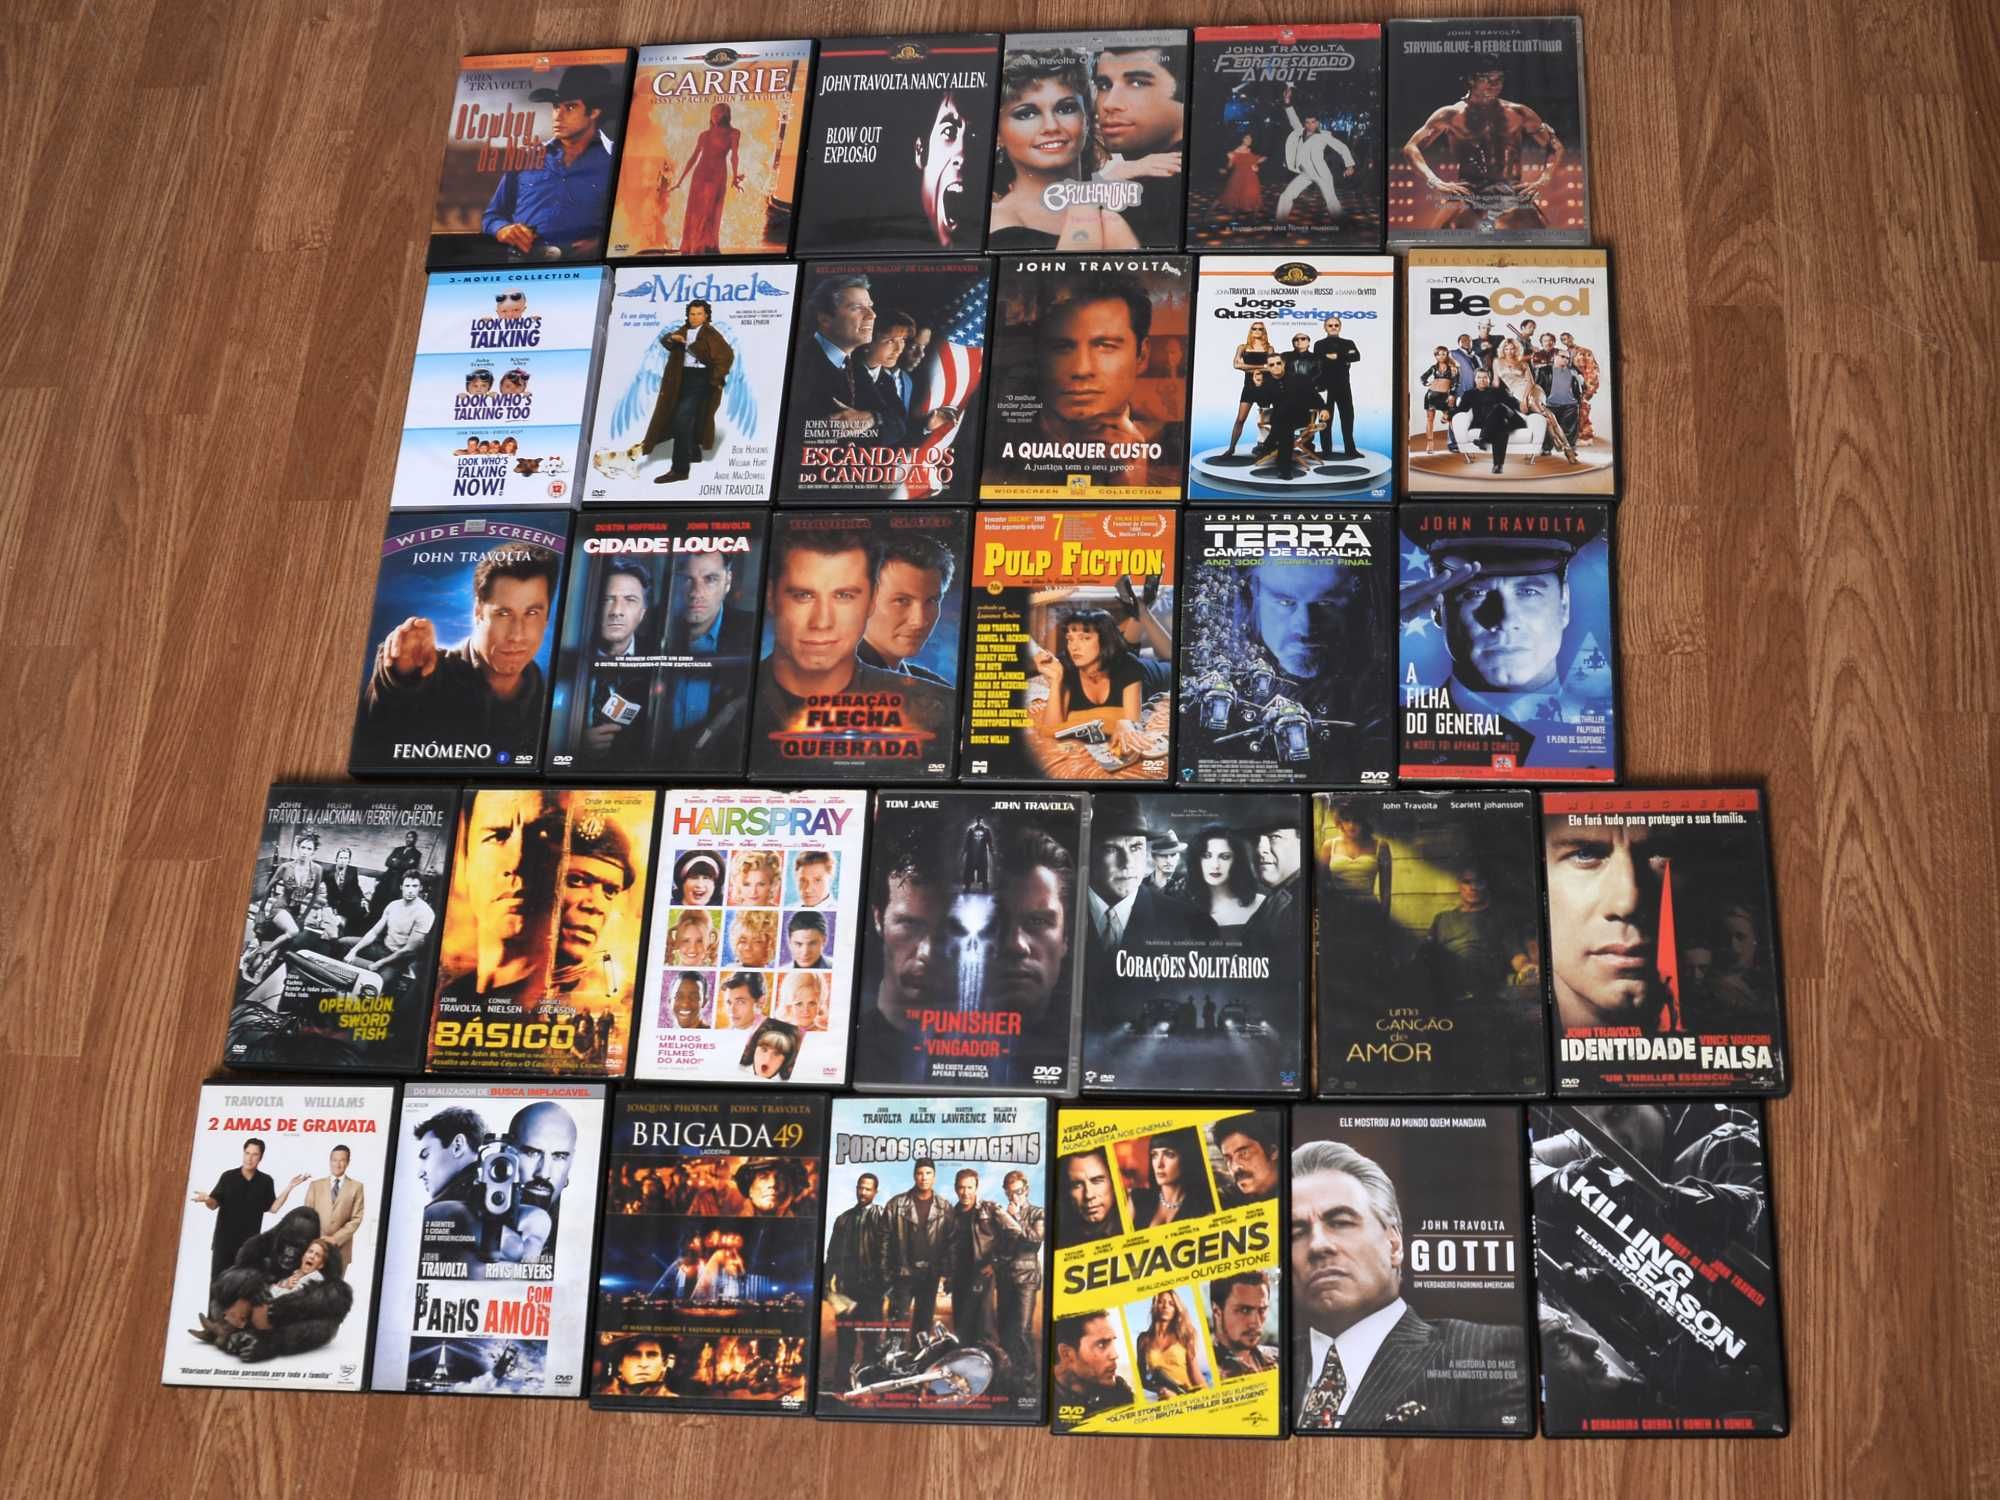 John Travolta DVD`S Originais